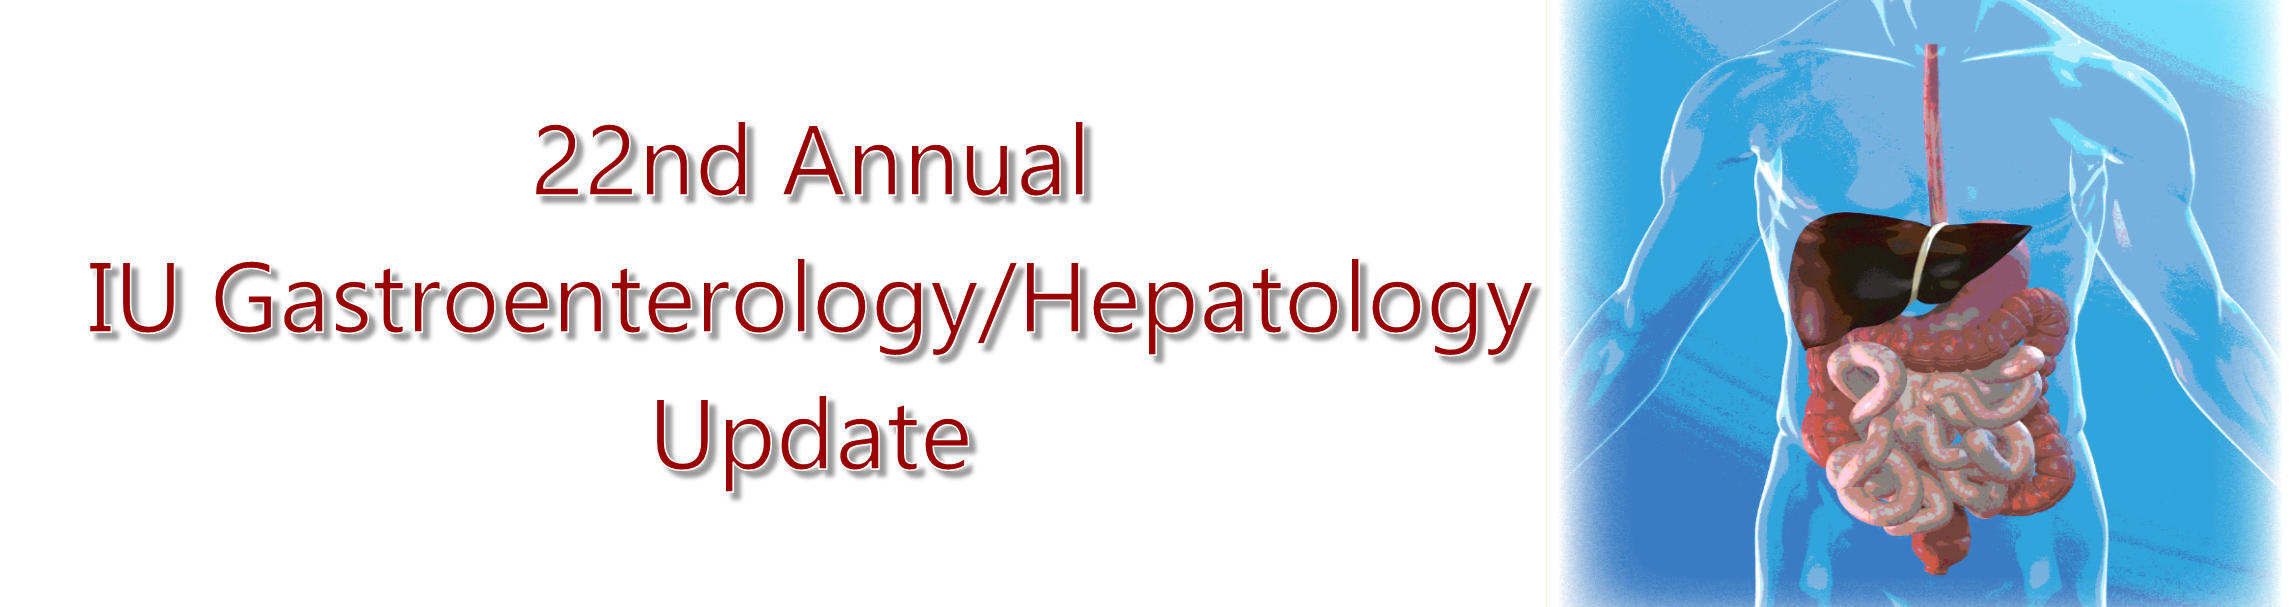 22nd Annual IU Gastroenterology/Hepatology Update Banner